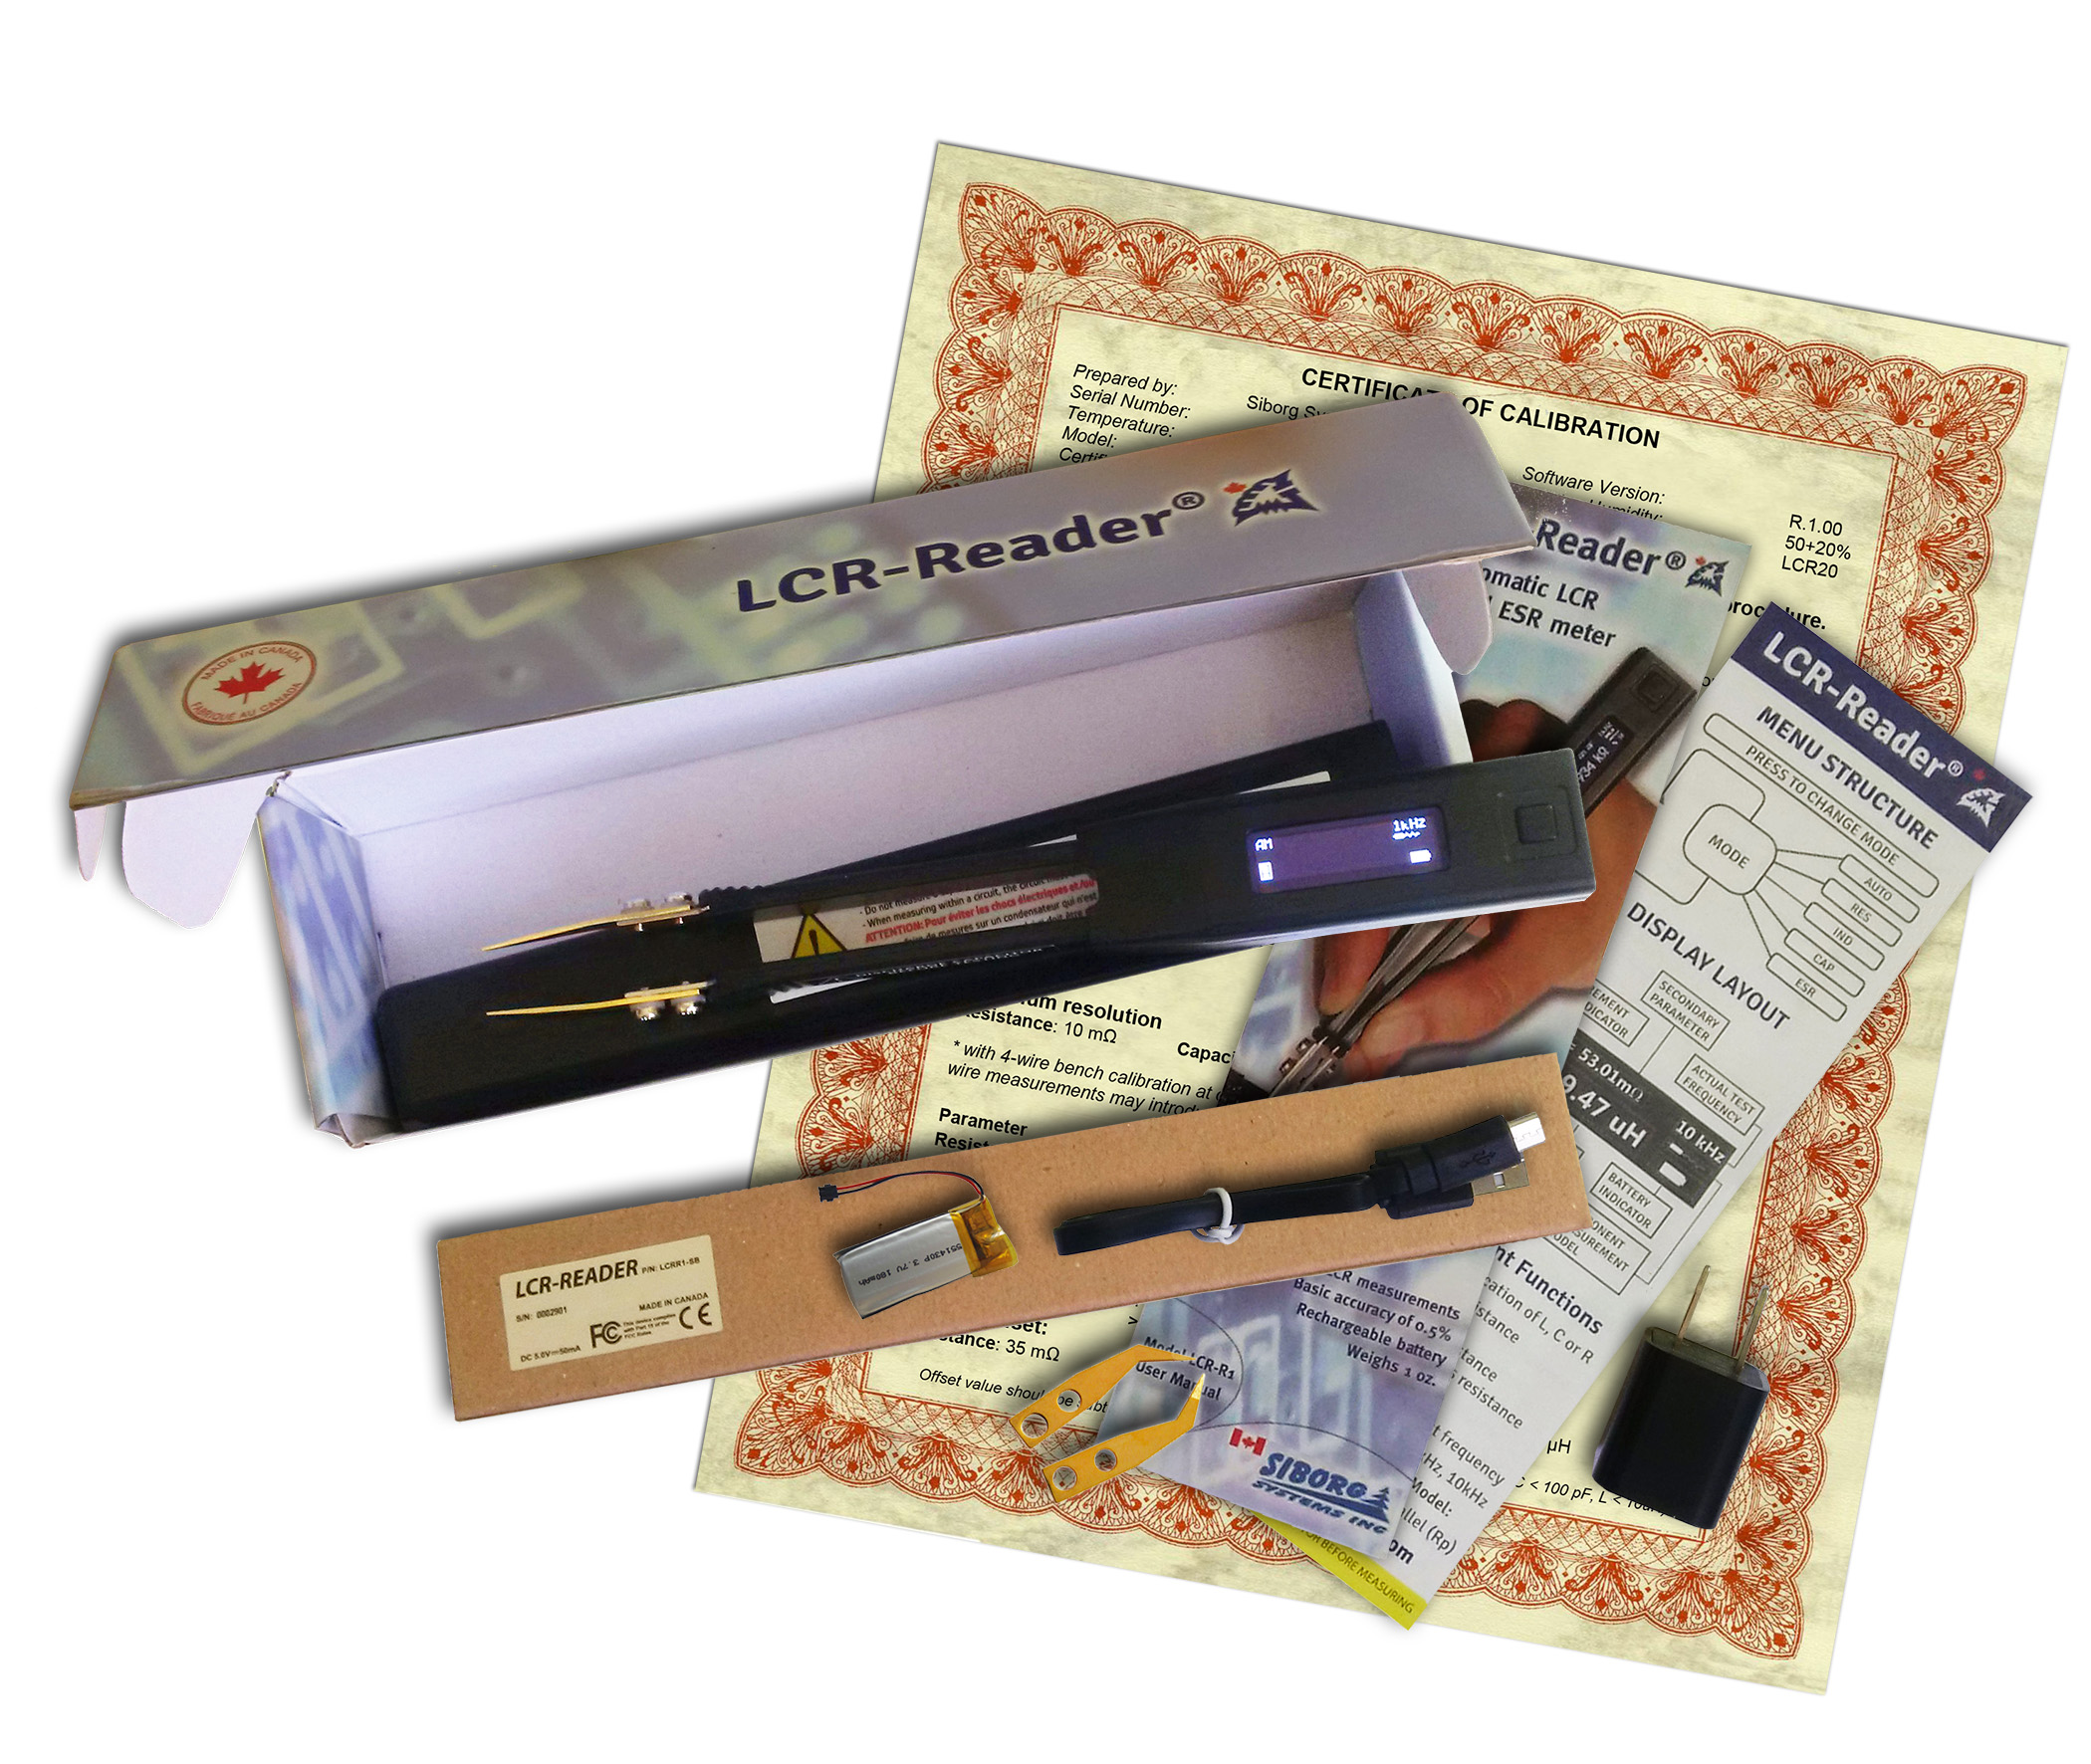 LCR-Reader Professional task kit